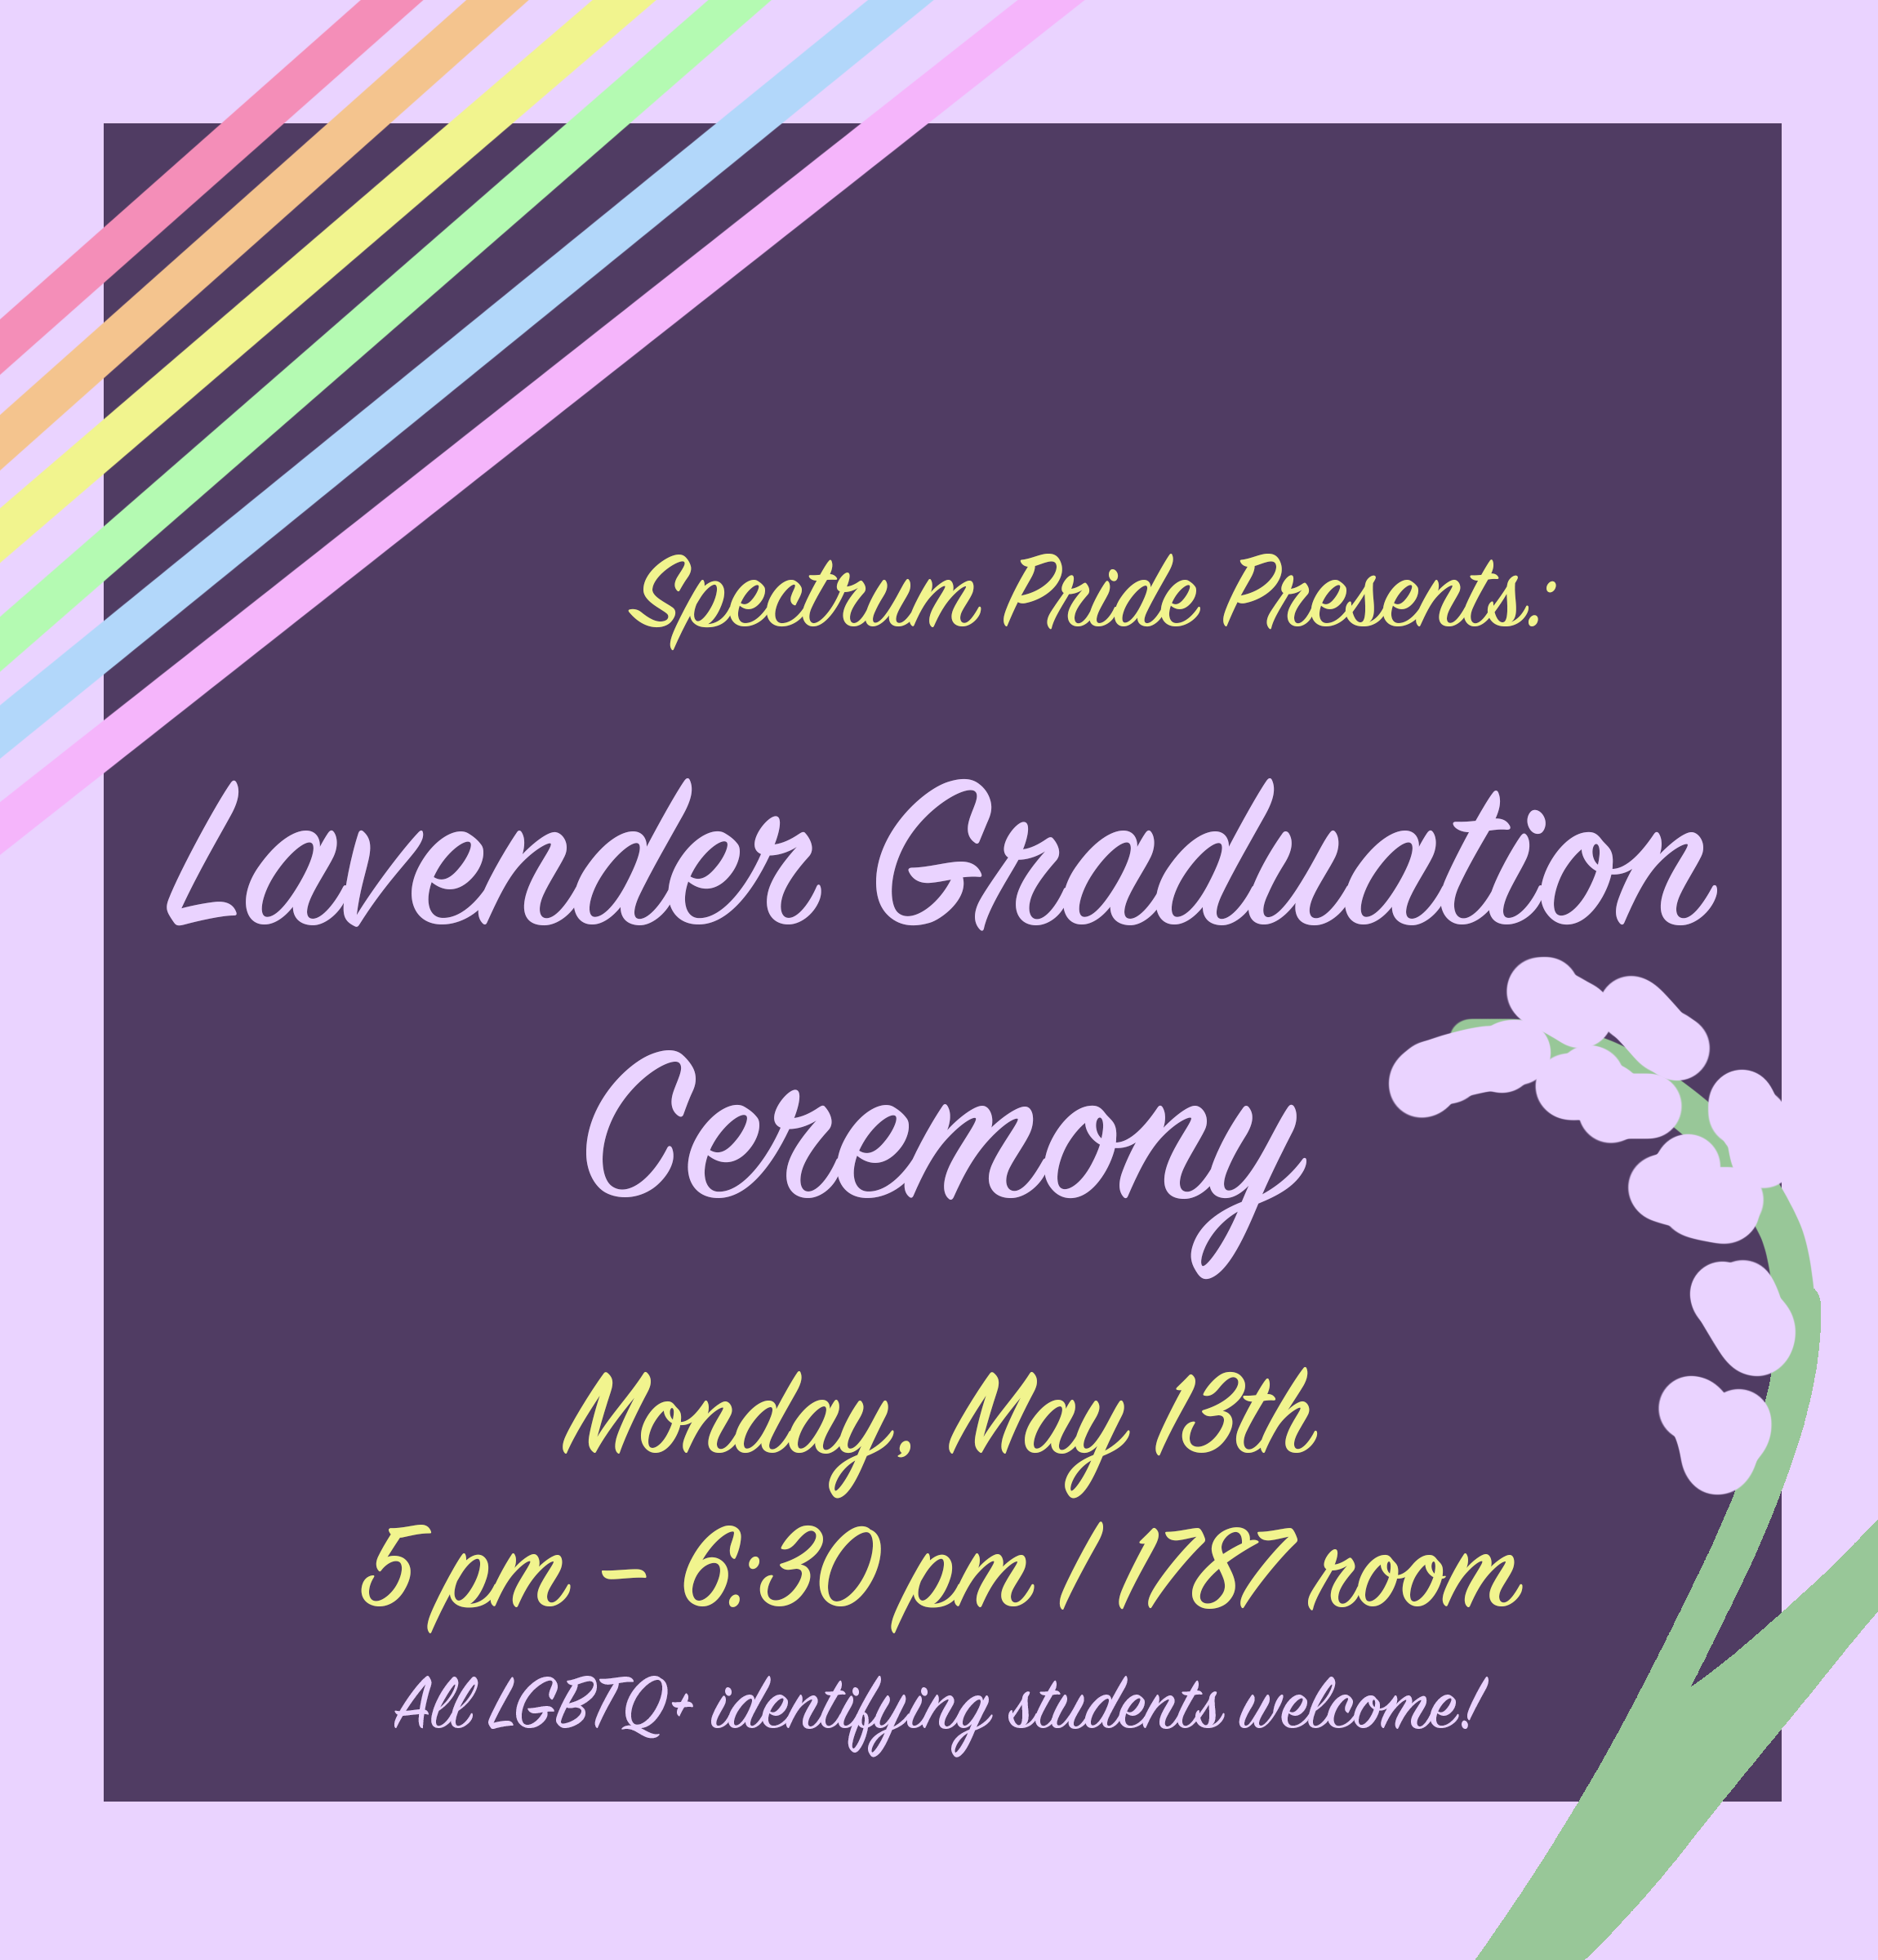 Spectrum Pride’s First Lavender Graduation Ceremony!